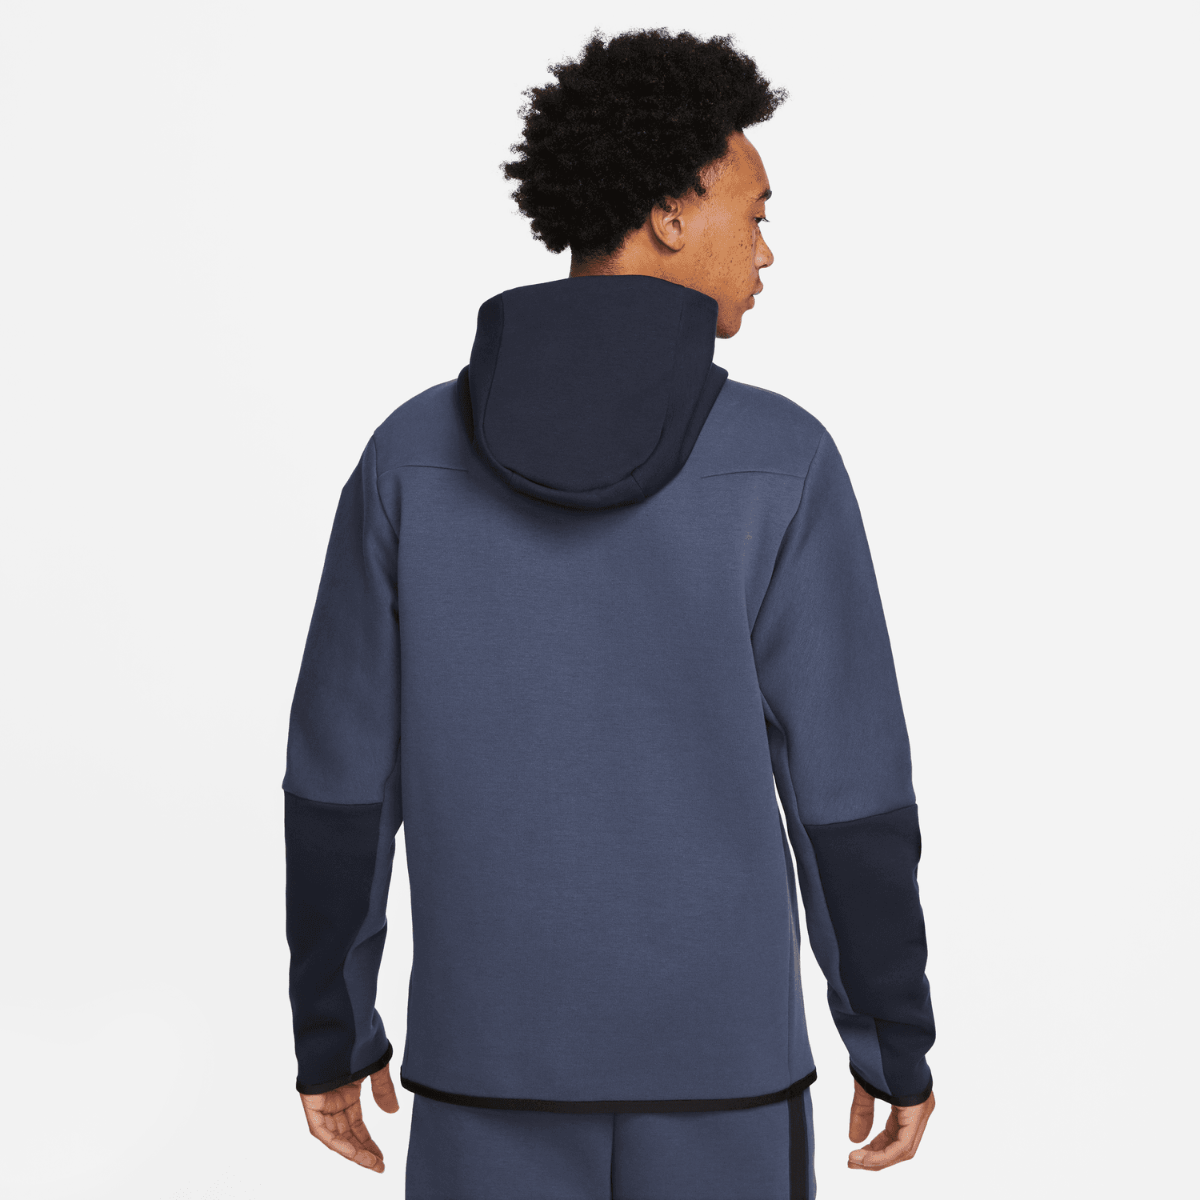 Felpa con cappuccio Nike Tech Fleece - blu/nera